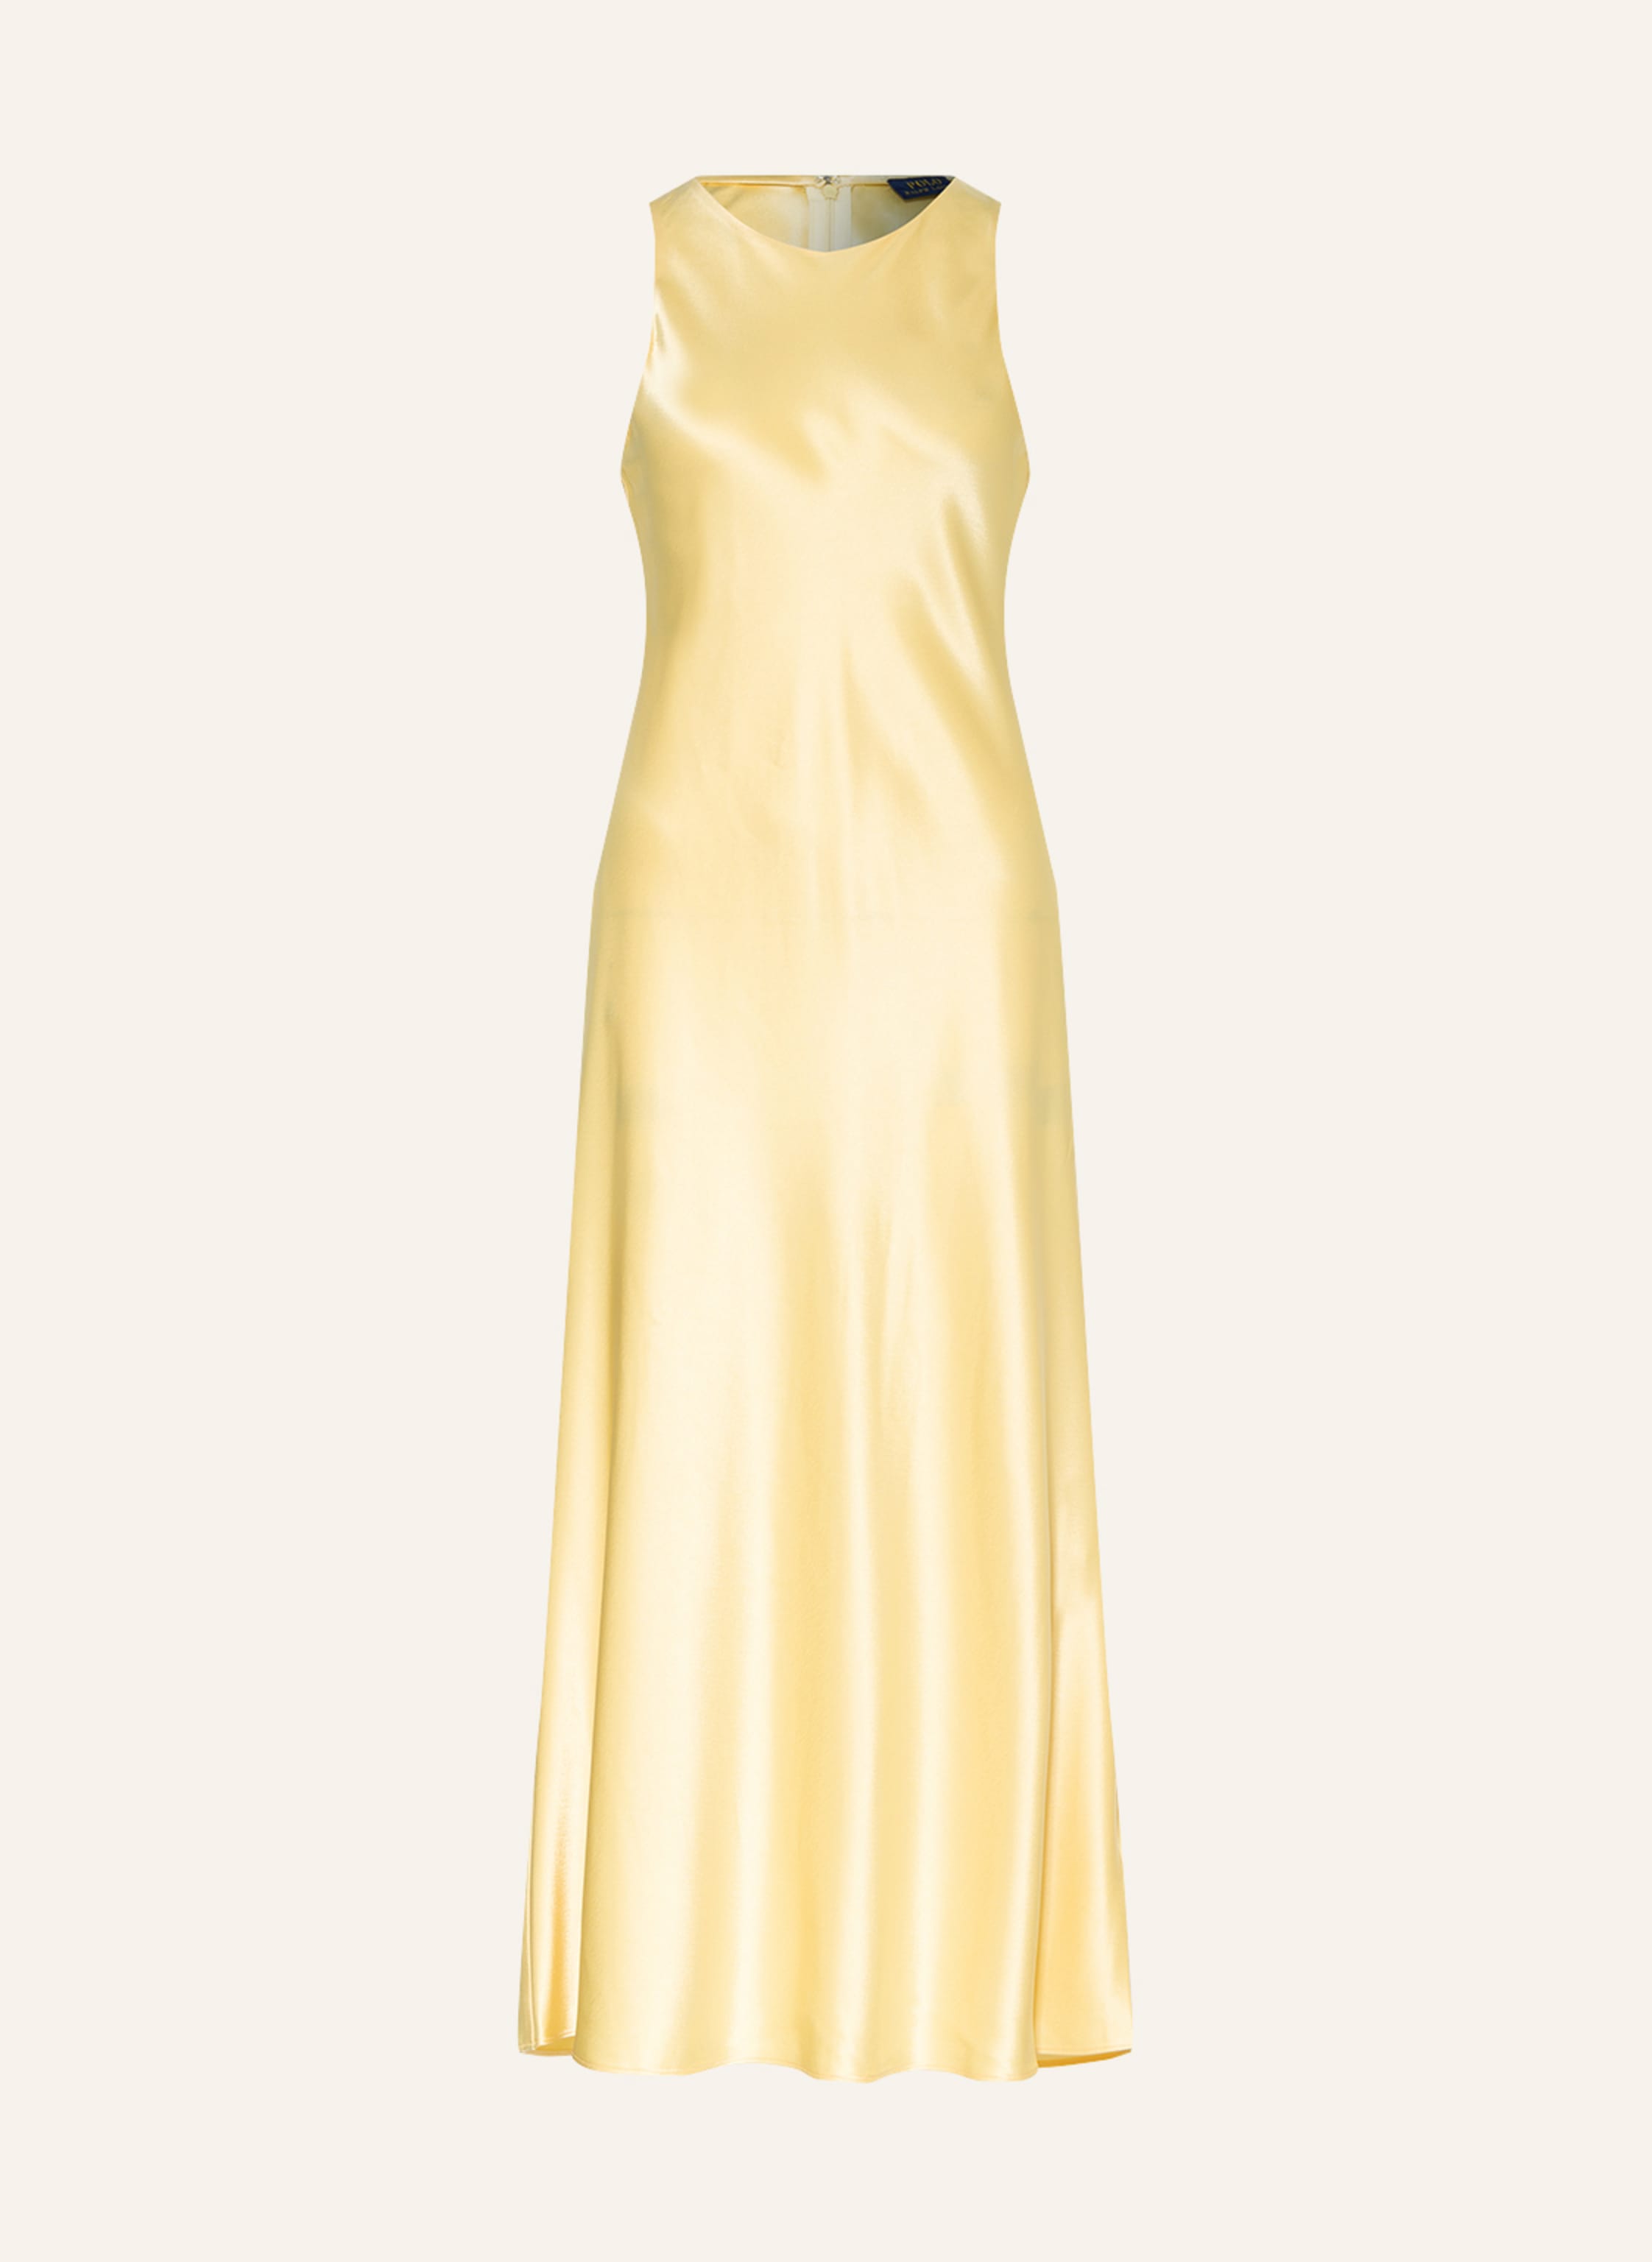 POLO RALPH LAUREN Satin dress in yellow | Breuninger